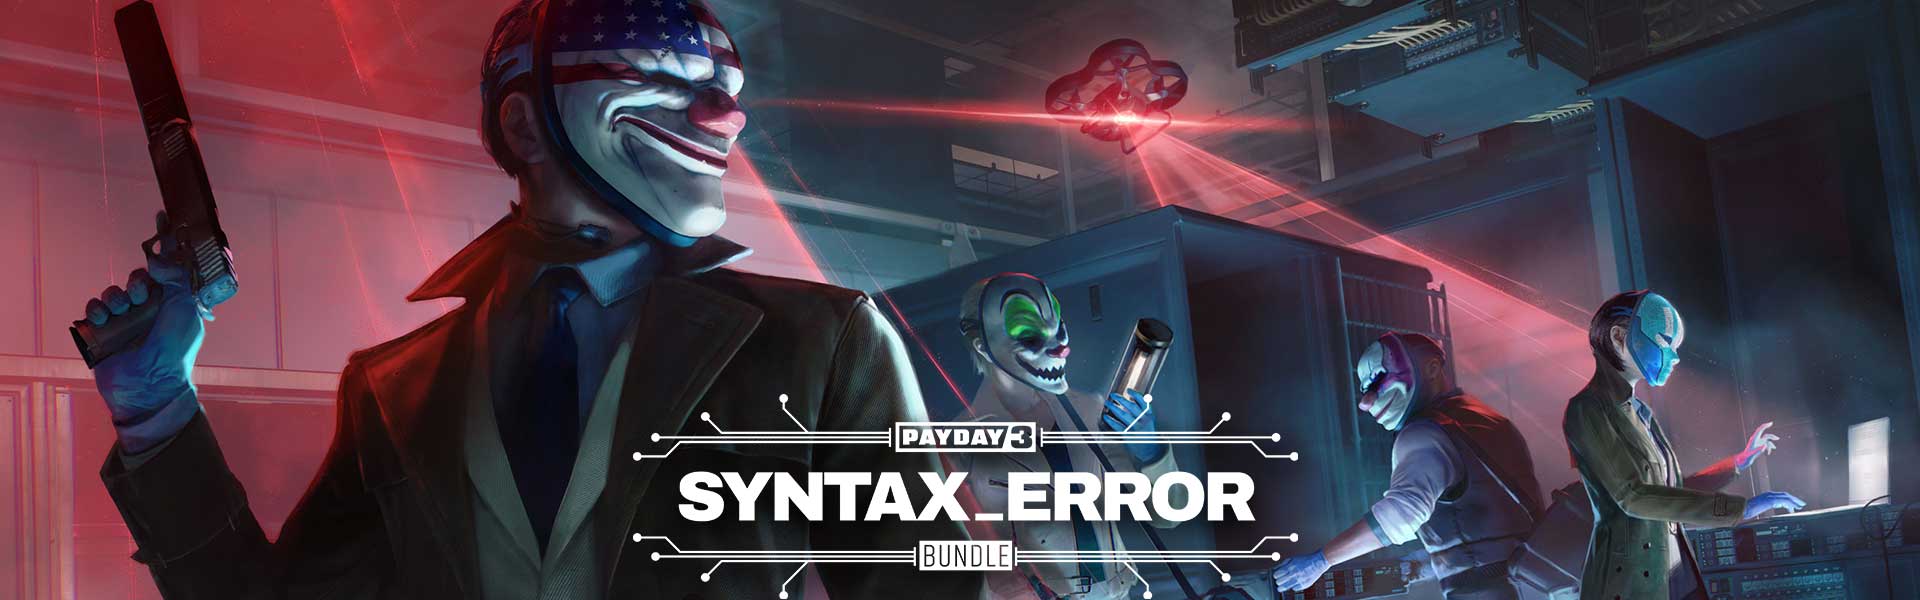 Payday 3 Dev Update 2 Introduces New DLC 'Syntax Error